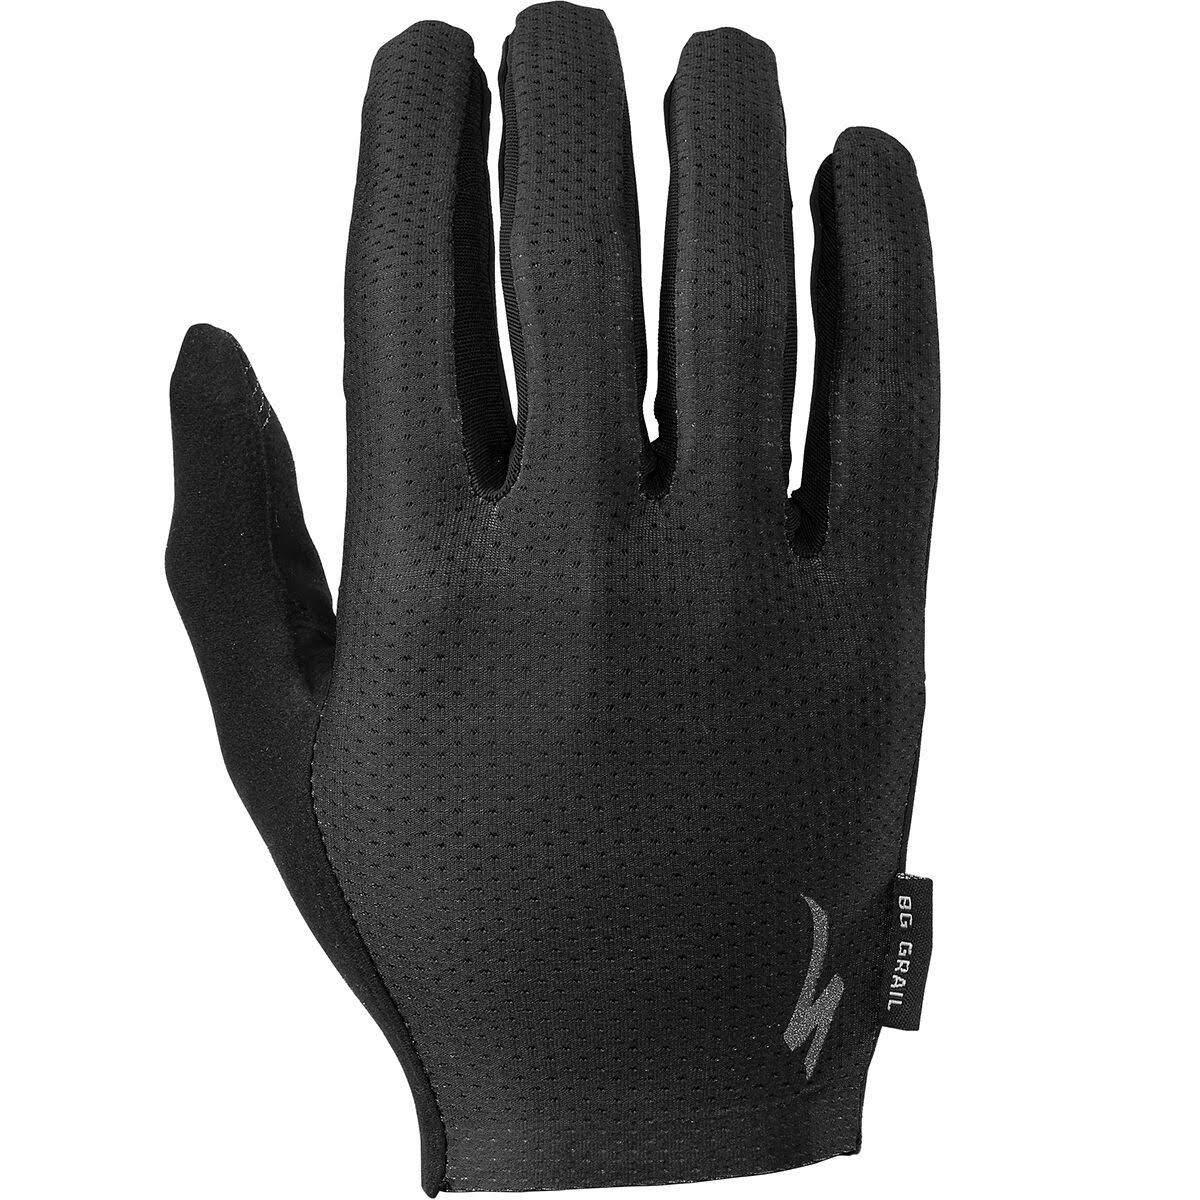 Specialized Grail Long Finger Gloves (Colour: Black, Size: Large)